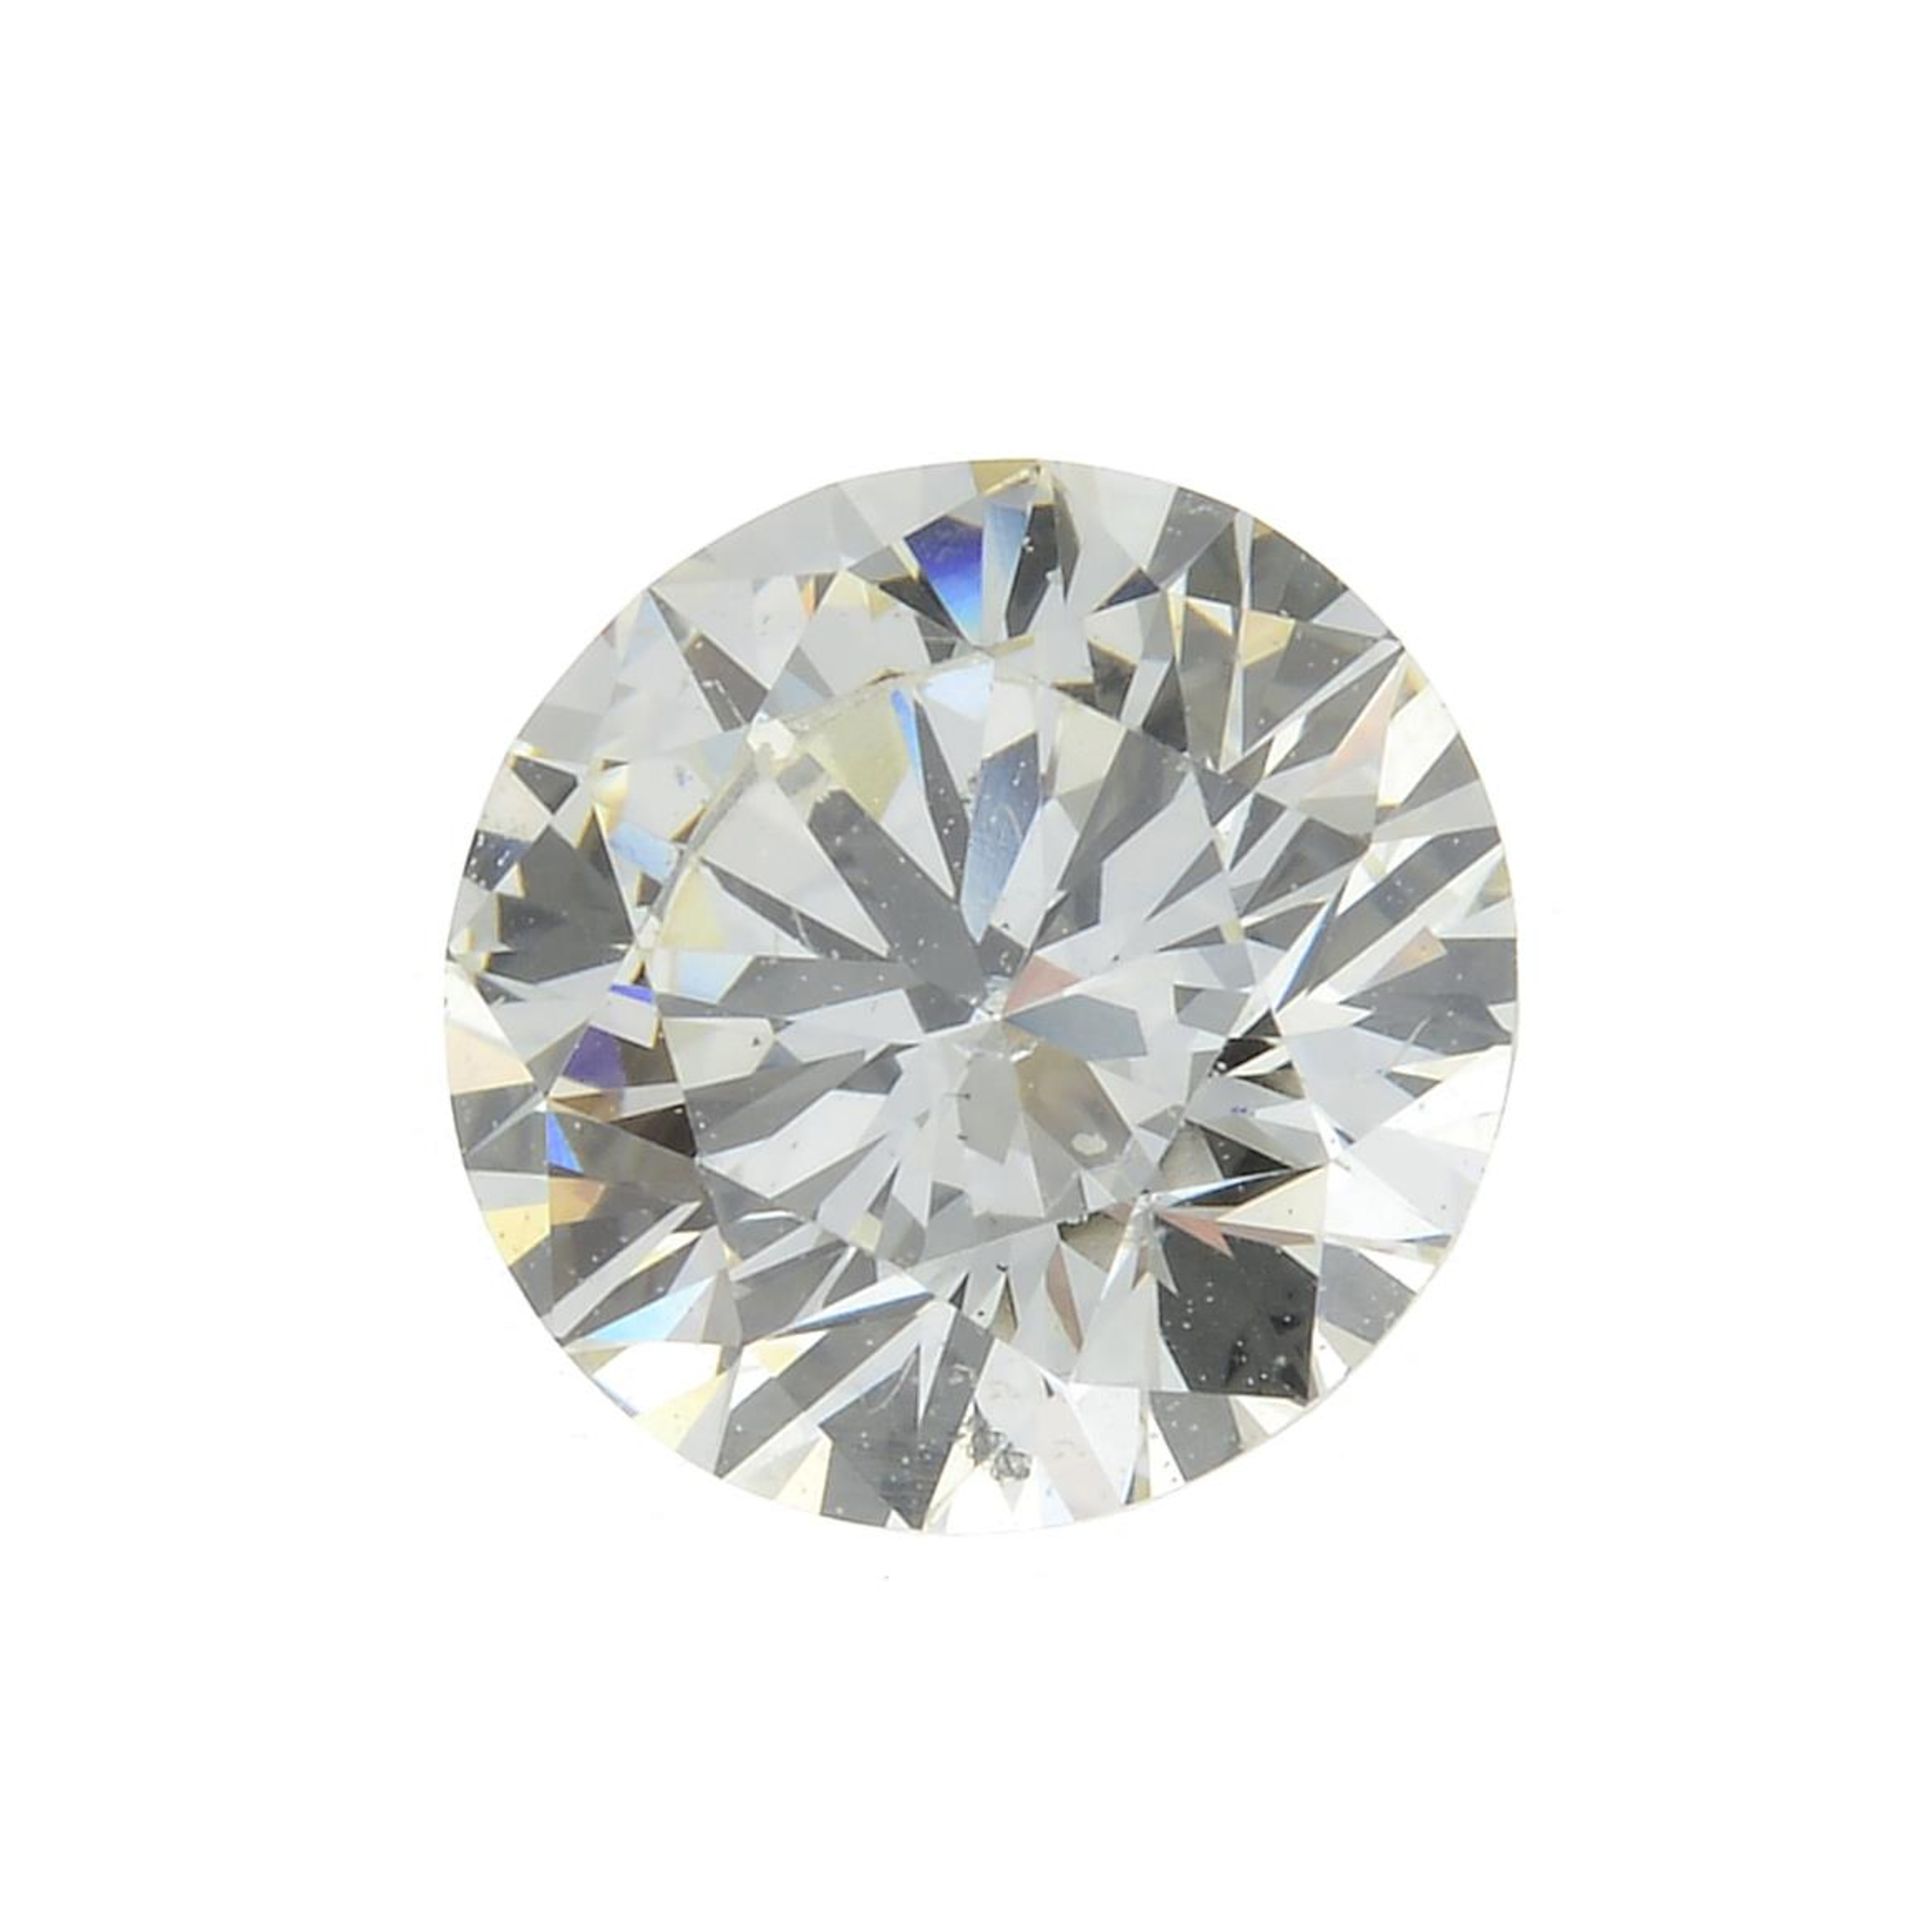 A brilliant-cut diamond.